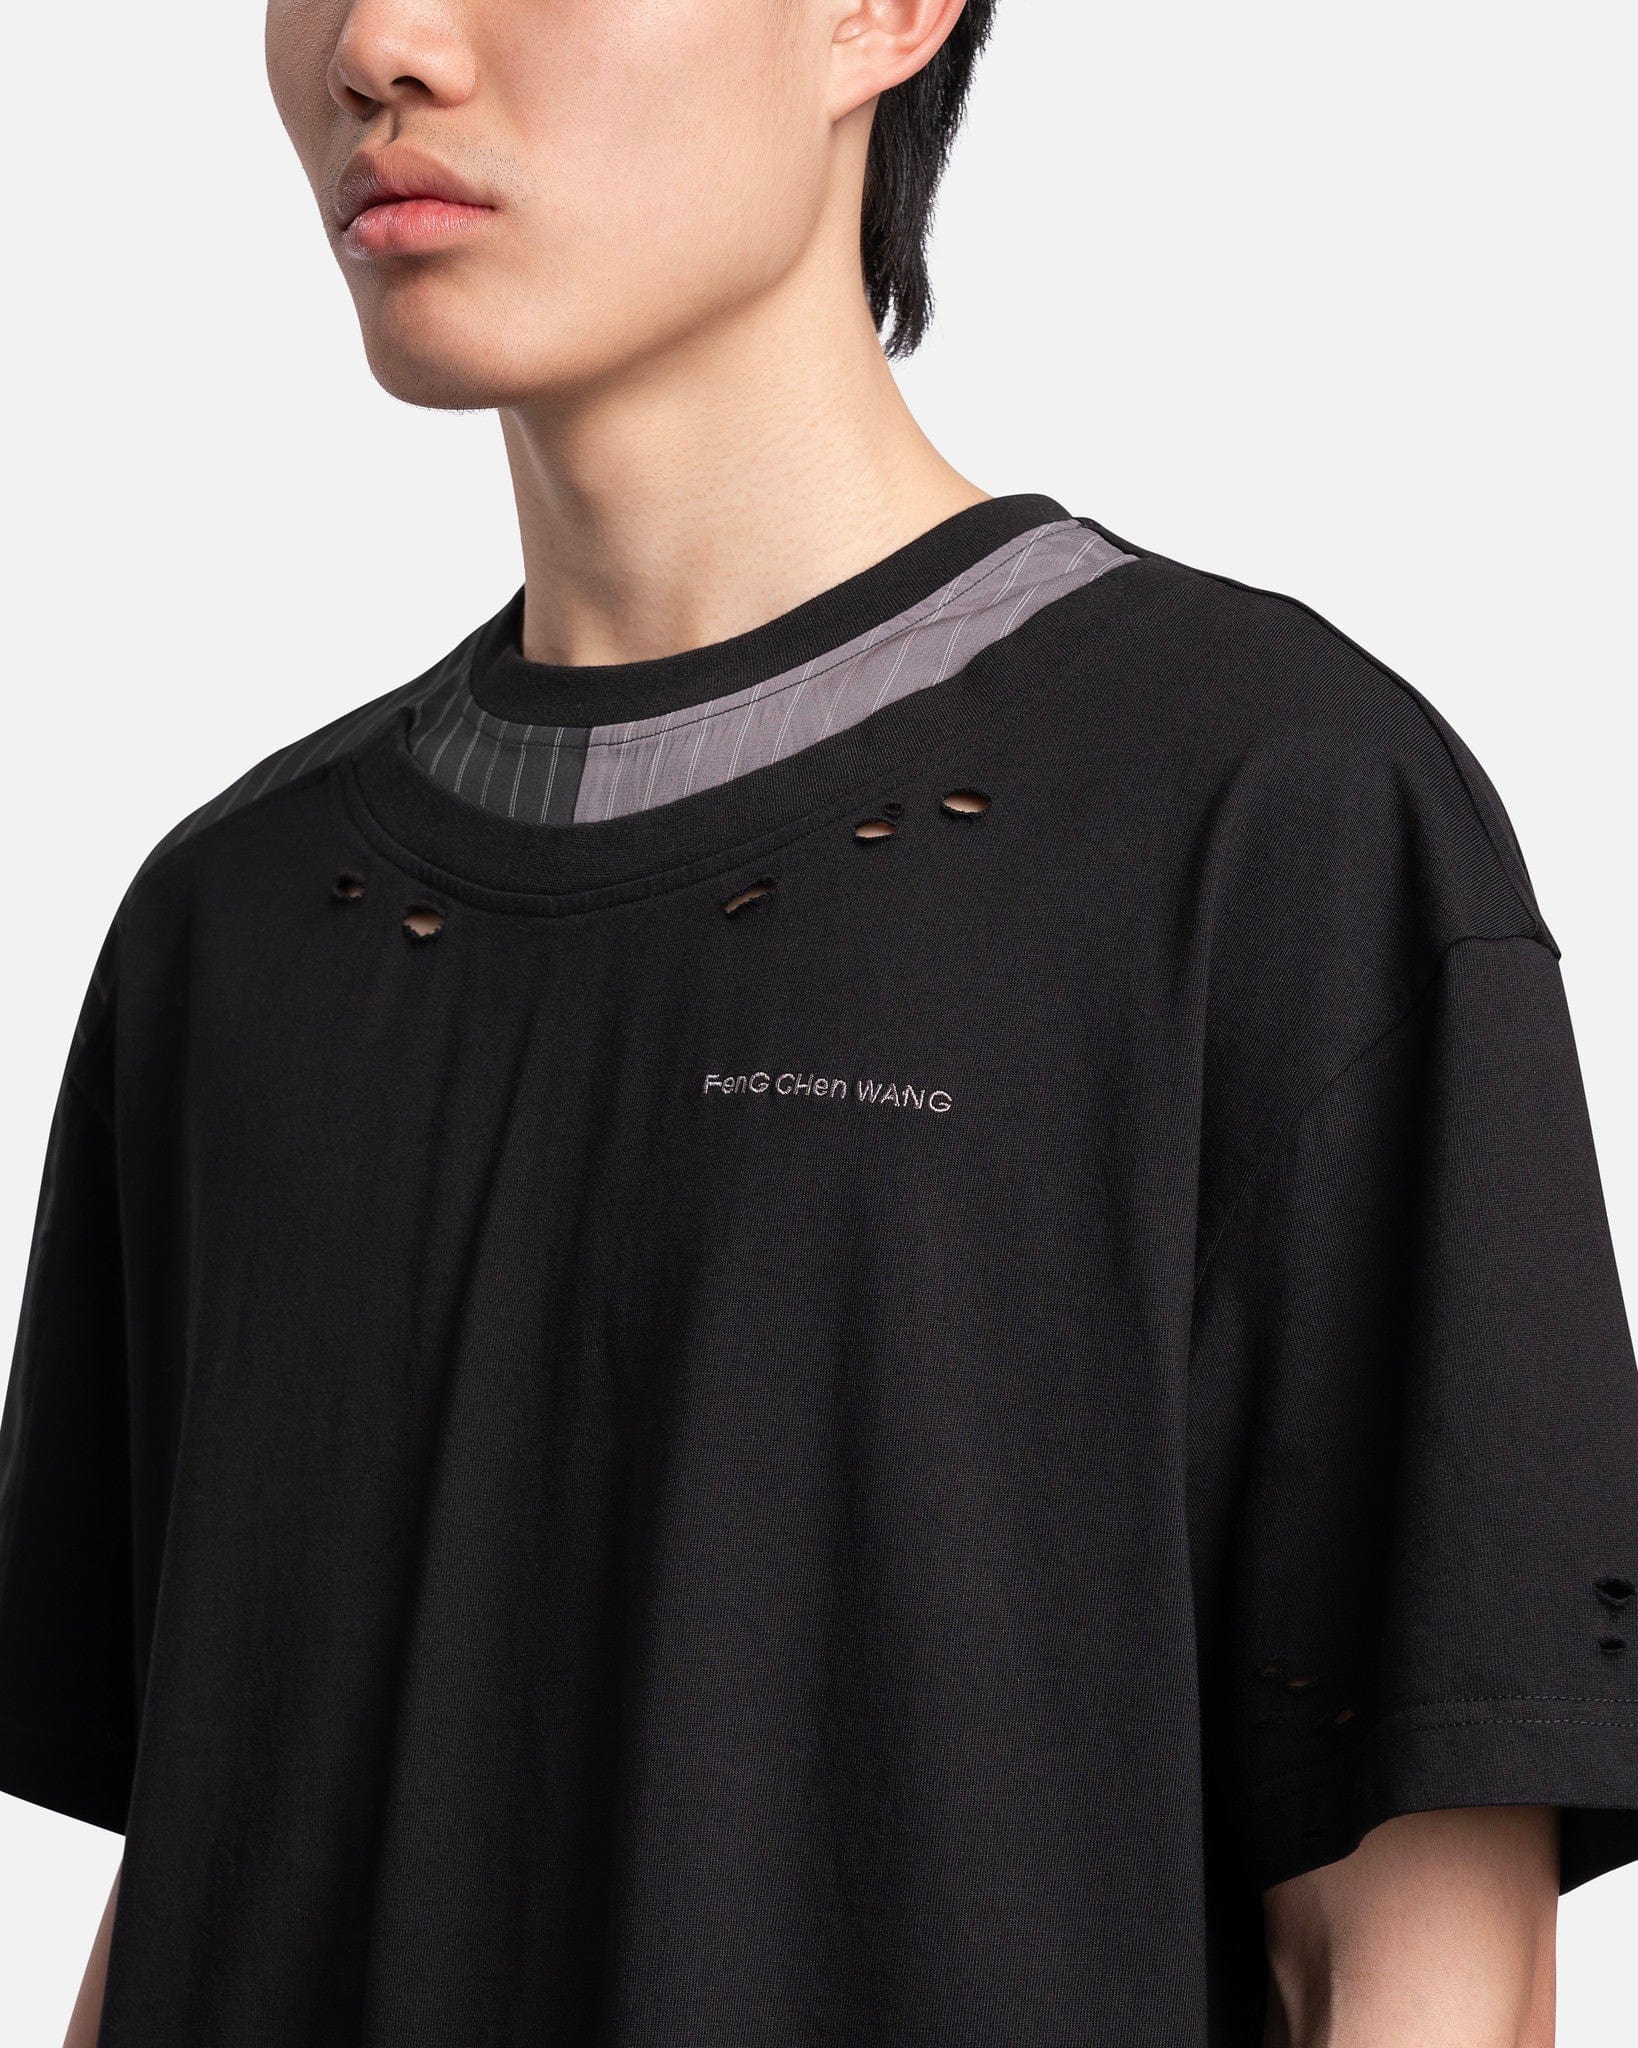 Feng Chen Wang Men's T-Shirts Patchwork Striped T-Shirt in Black